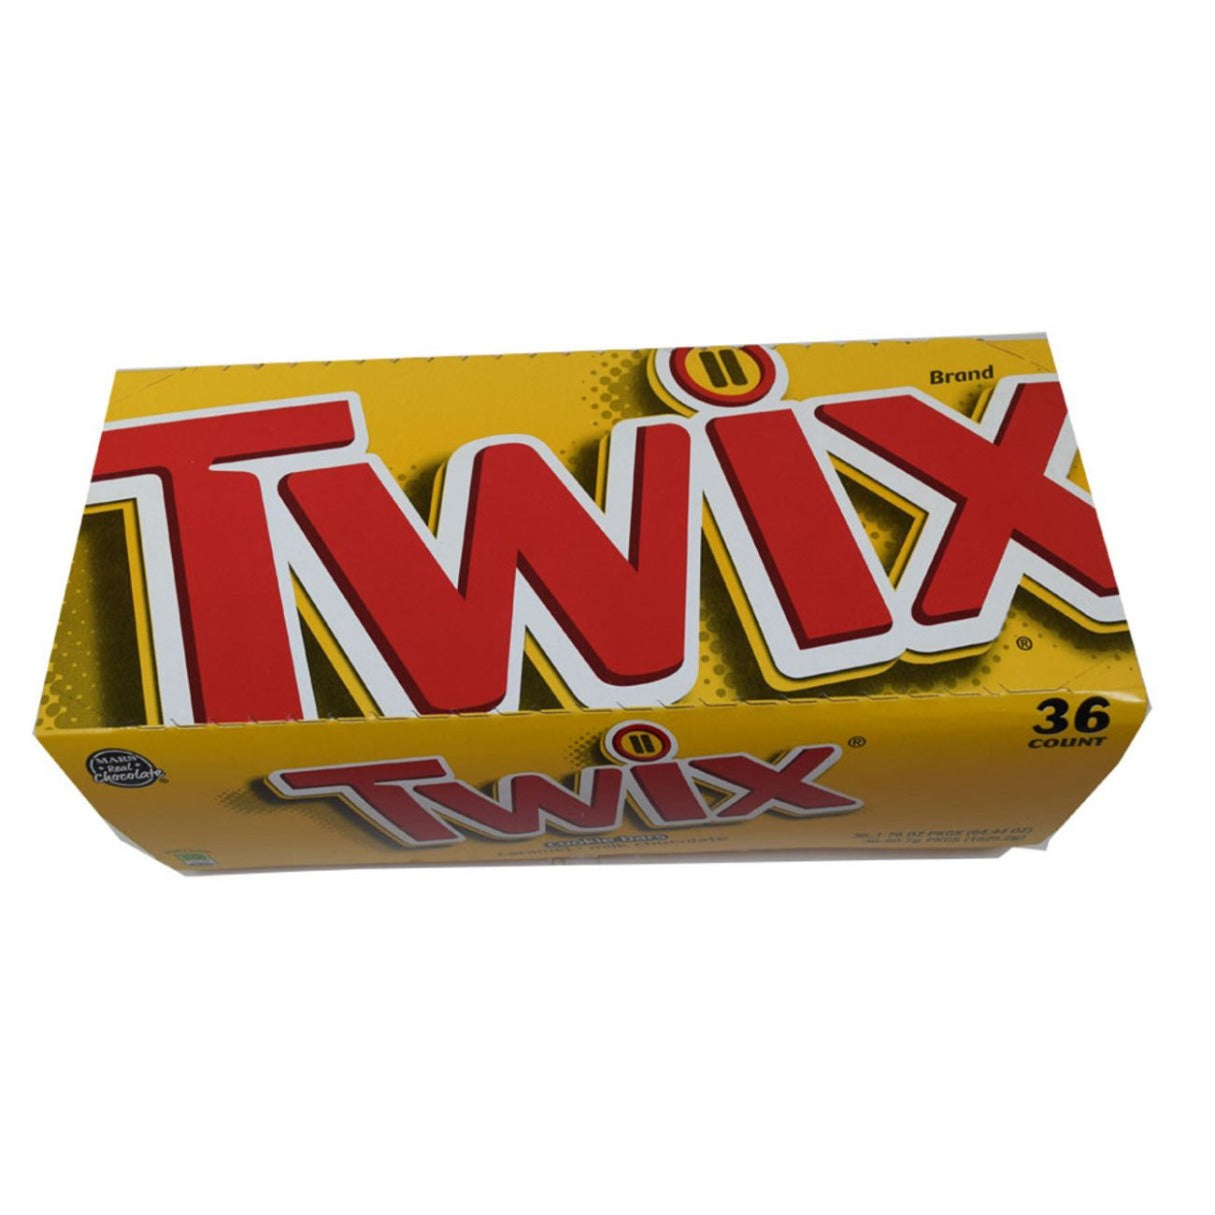 Twix Caramel Candy Bar - 36ct